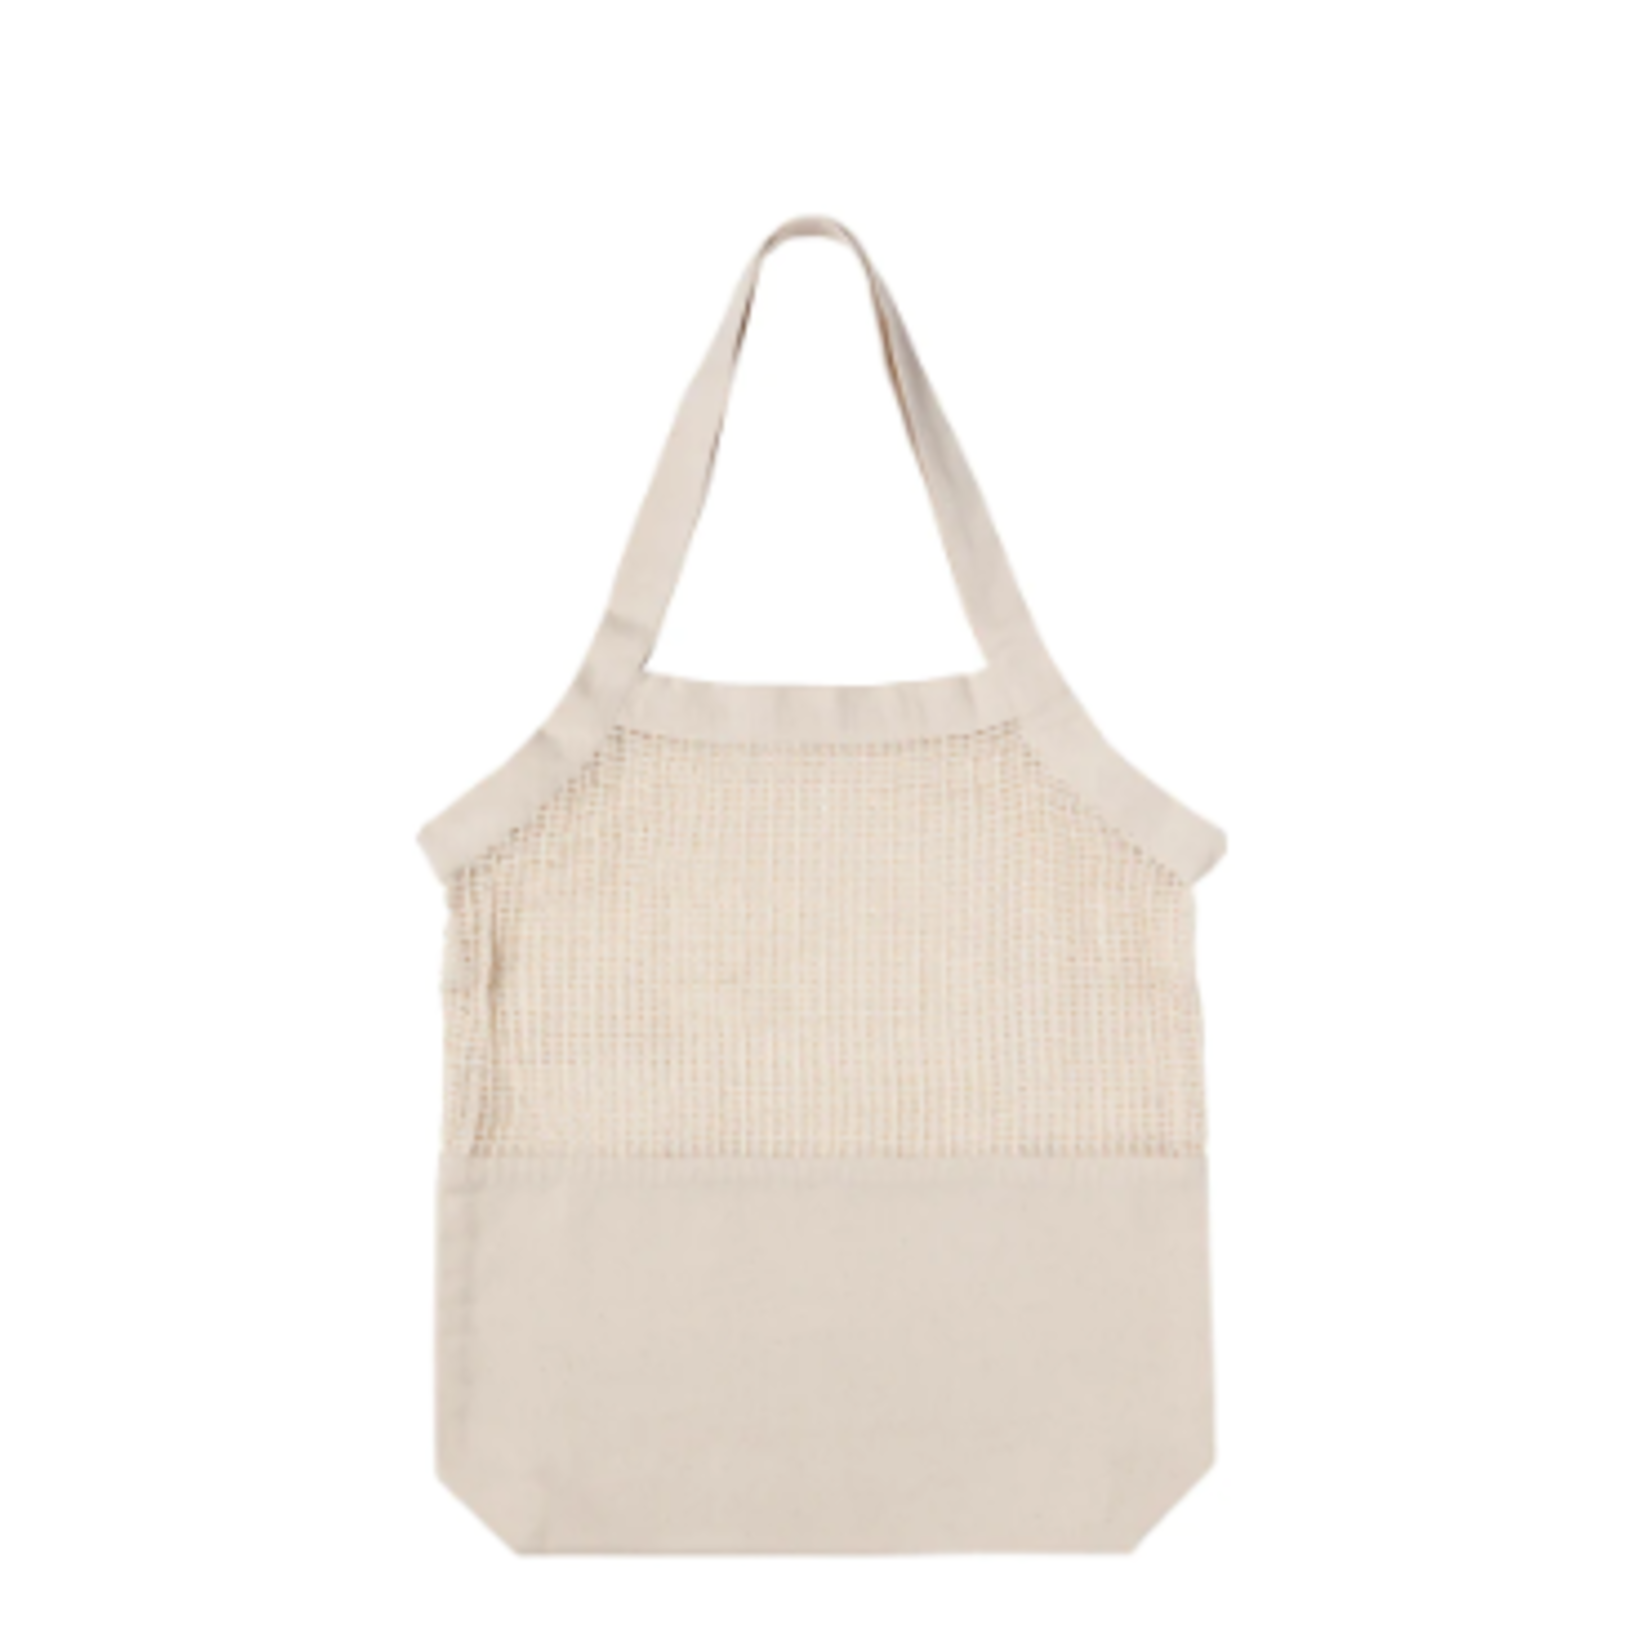 Now Designs Tote Bag, Mercado - Natural